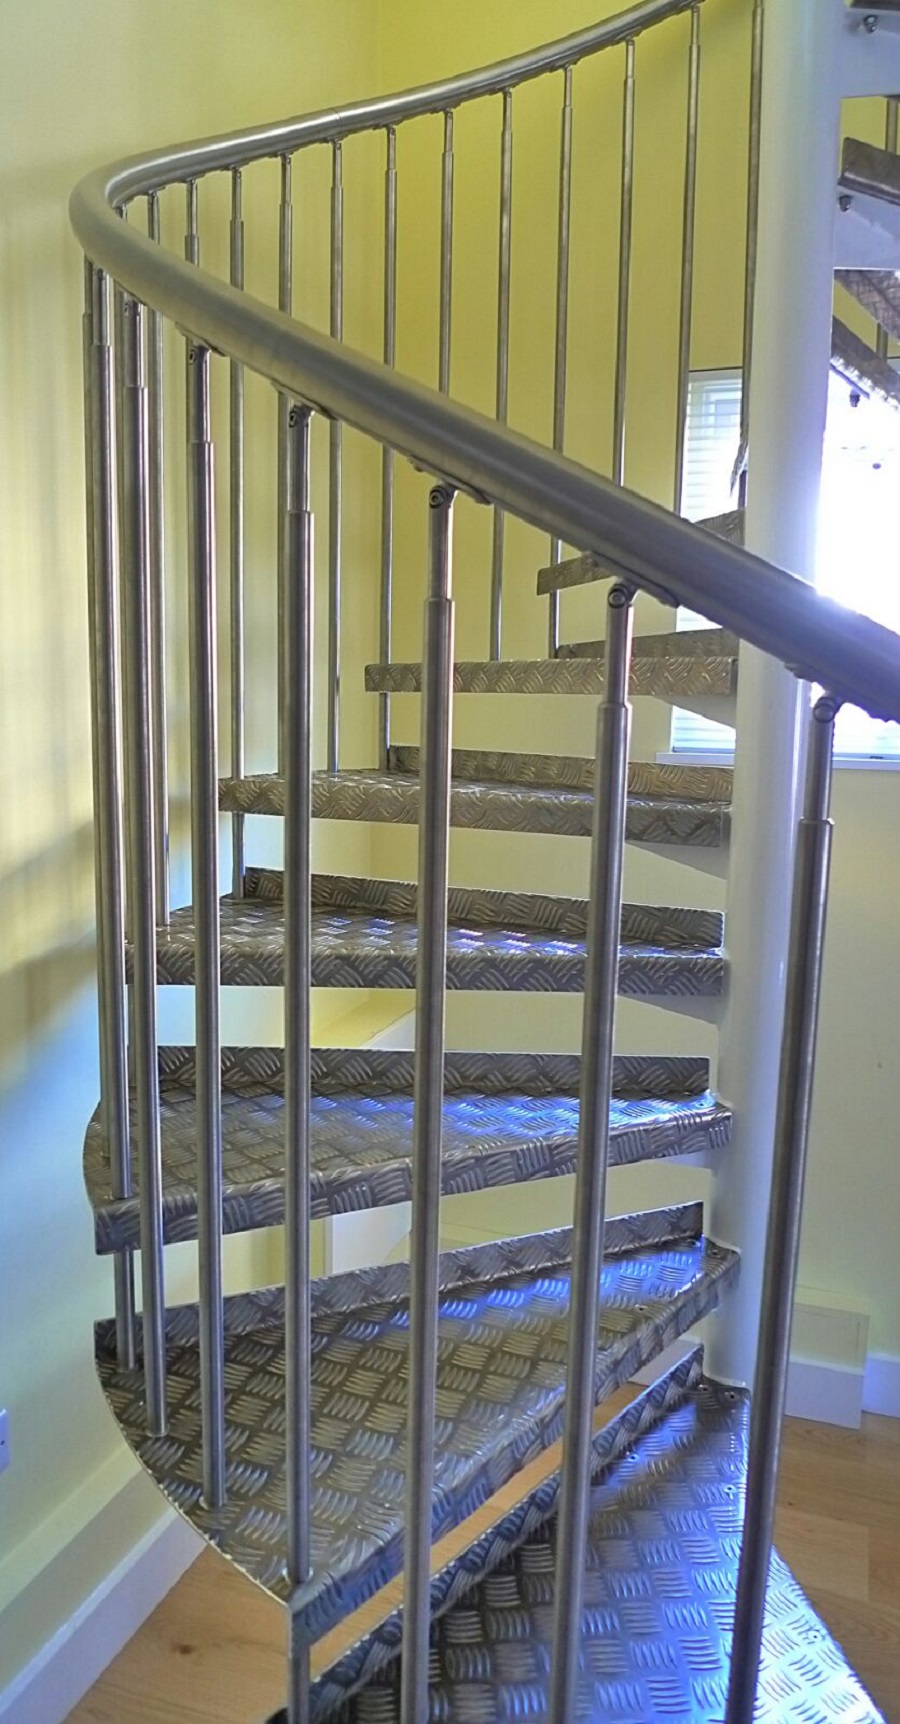 Spiral Staircase 3